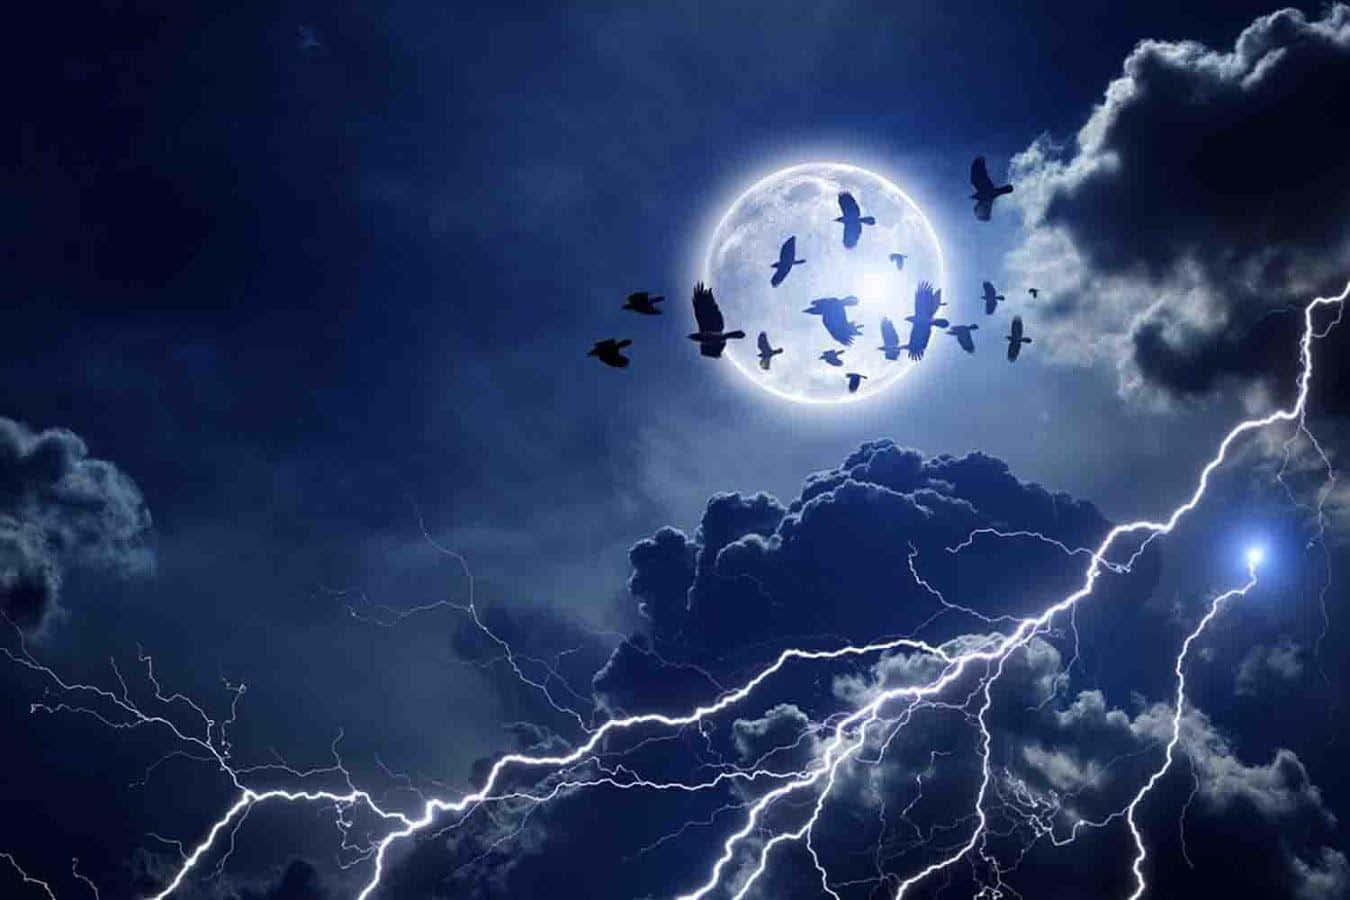 Moonlit Nightwith Lightningand Birds Wallpaper